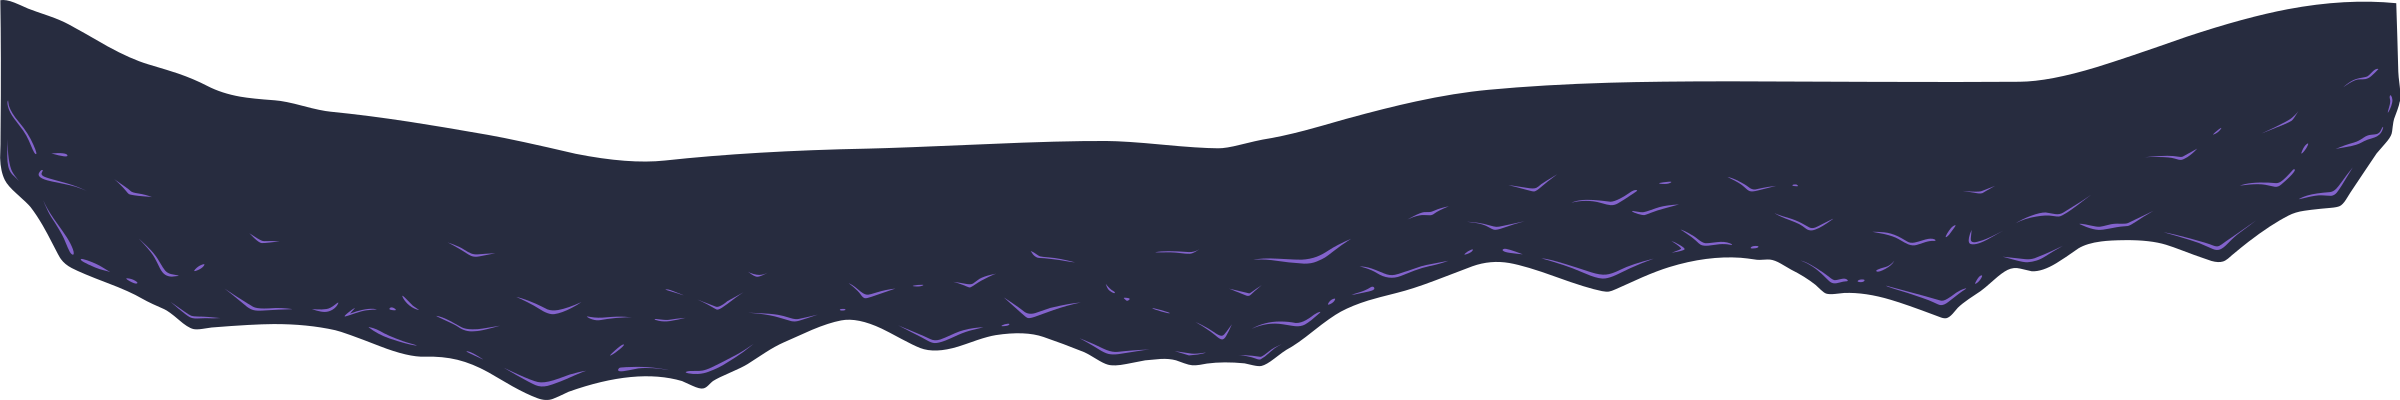 Ilmenskie Cave Gr Purple Large 1 PNG icon